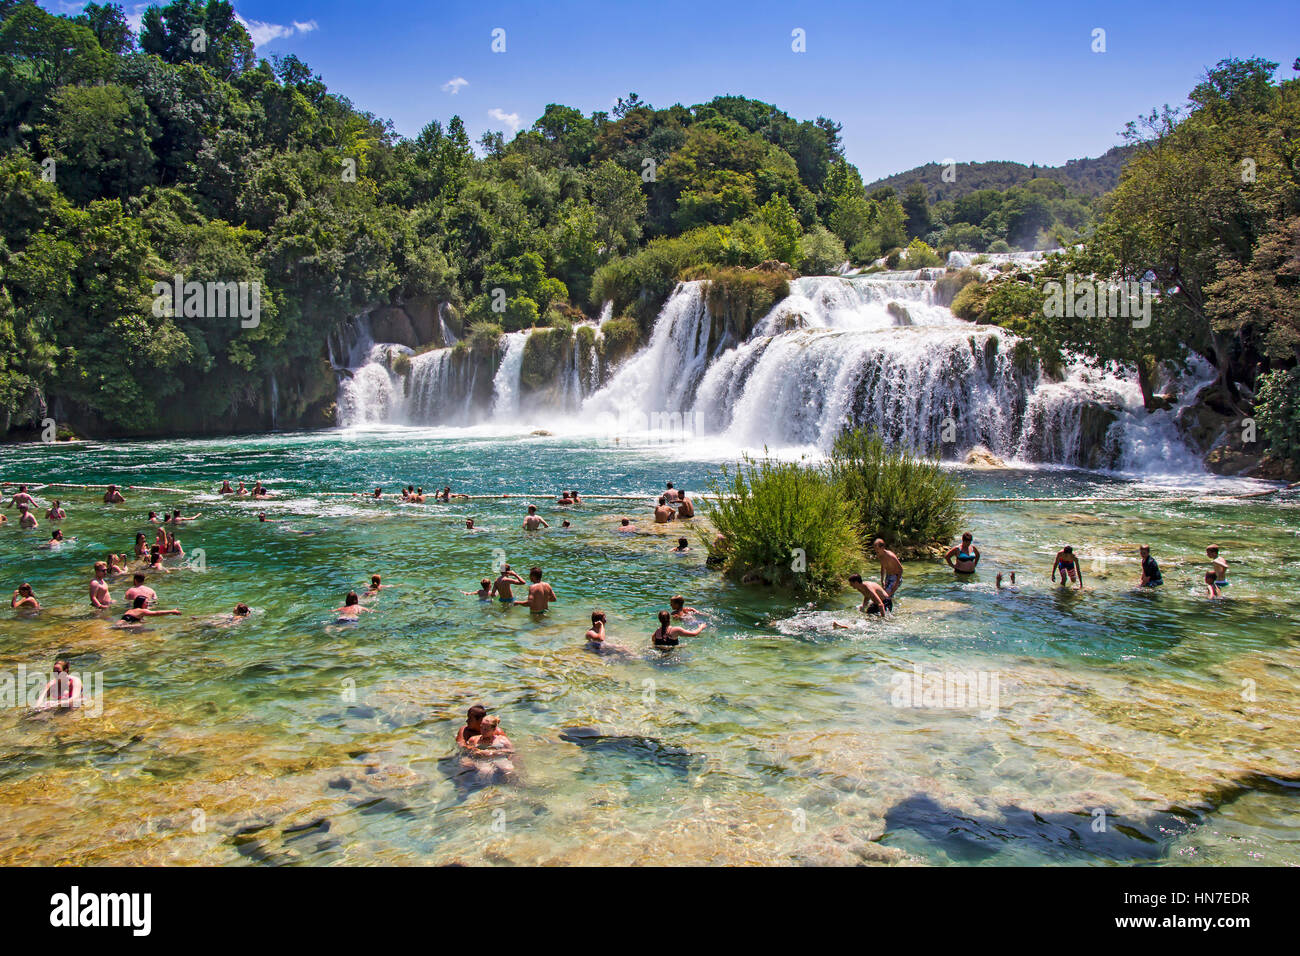 KRKA NATIONAL PARK, CROATIA - JULY 10, 2016: Many tourists  swim  in the Krka River in the Krka National Park in Croatia. This is one of the most famo Stock Photo